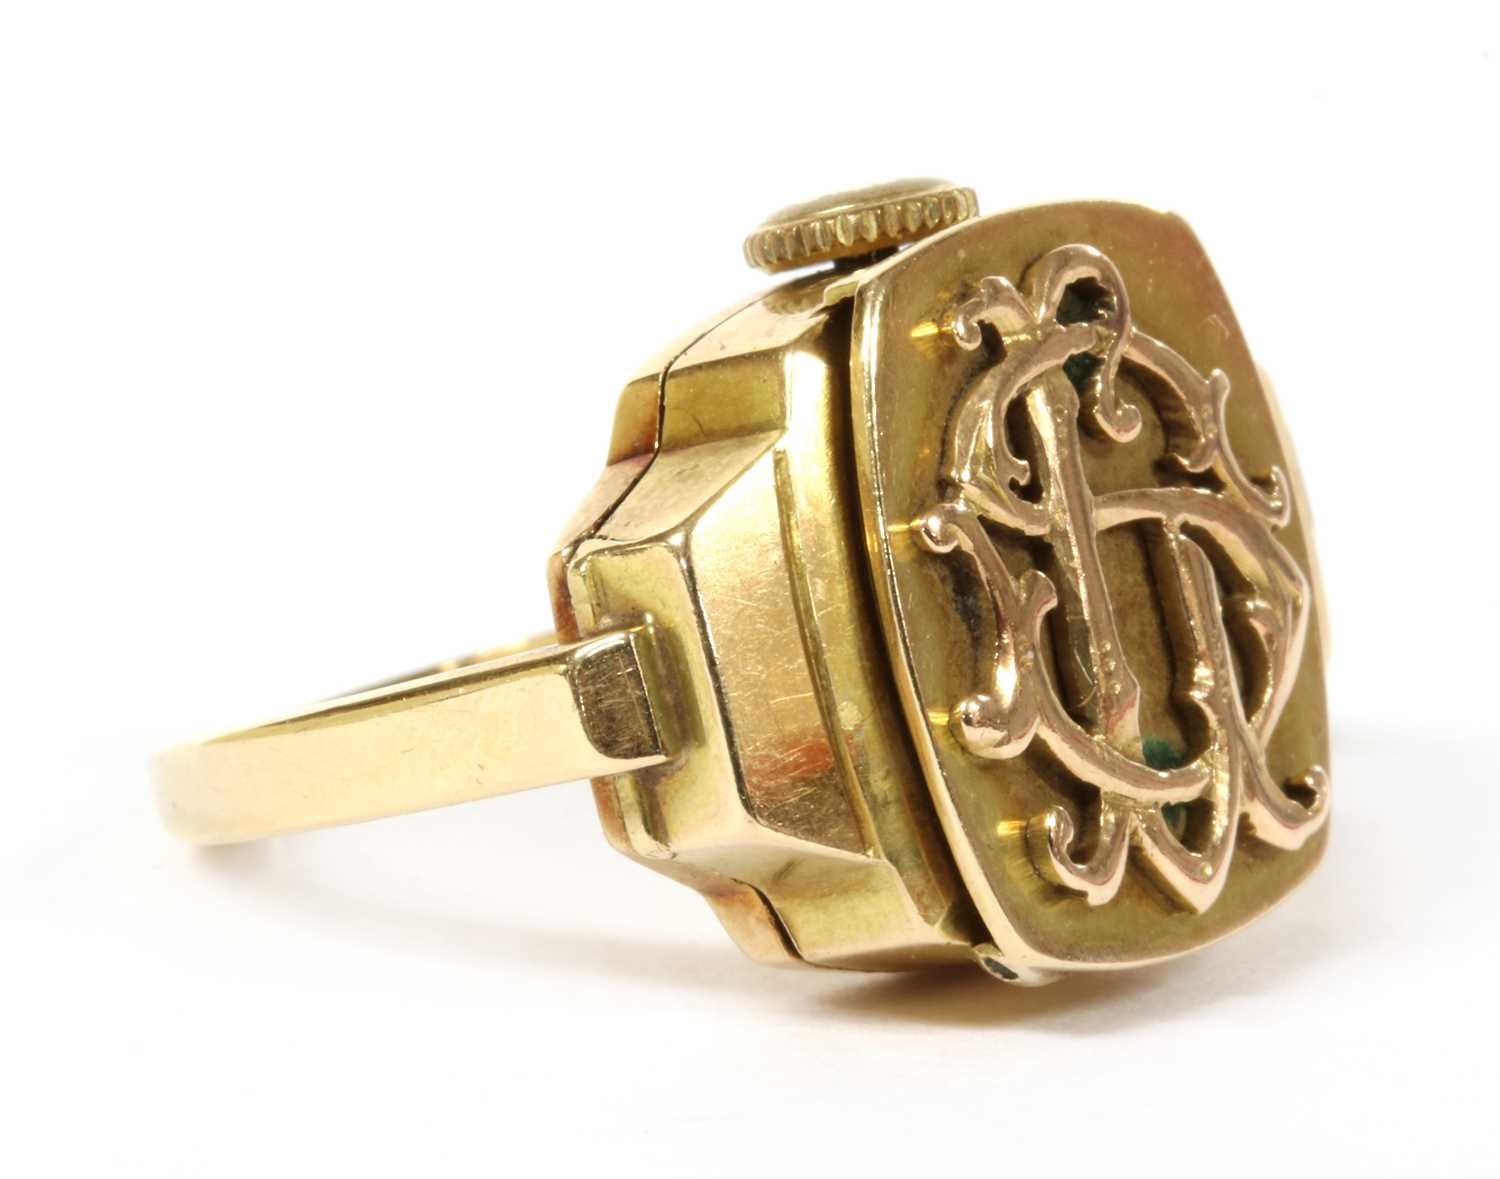 Lot 15 - A gold mechanical watch ring